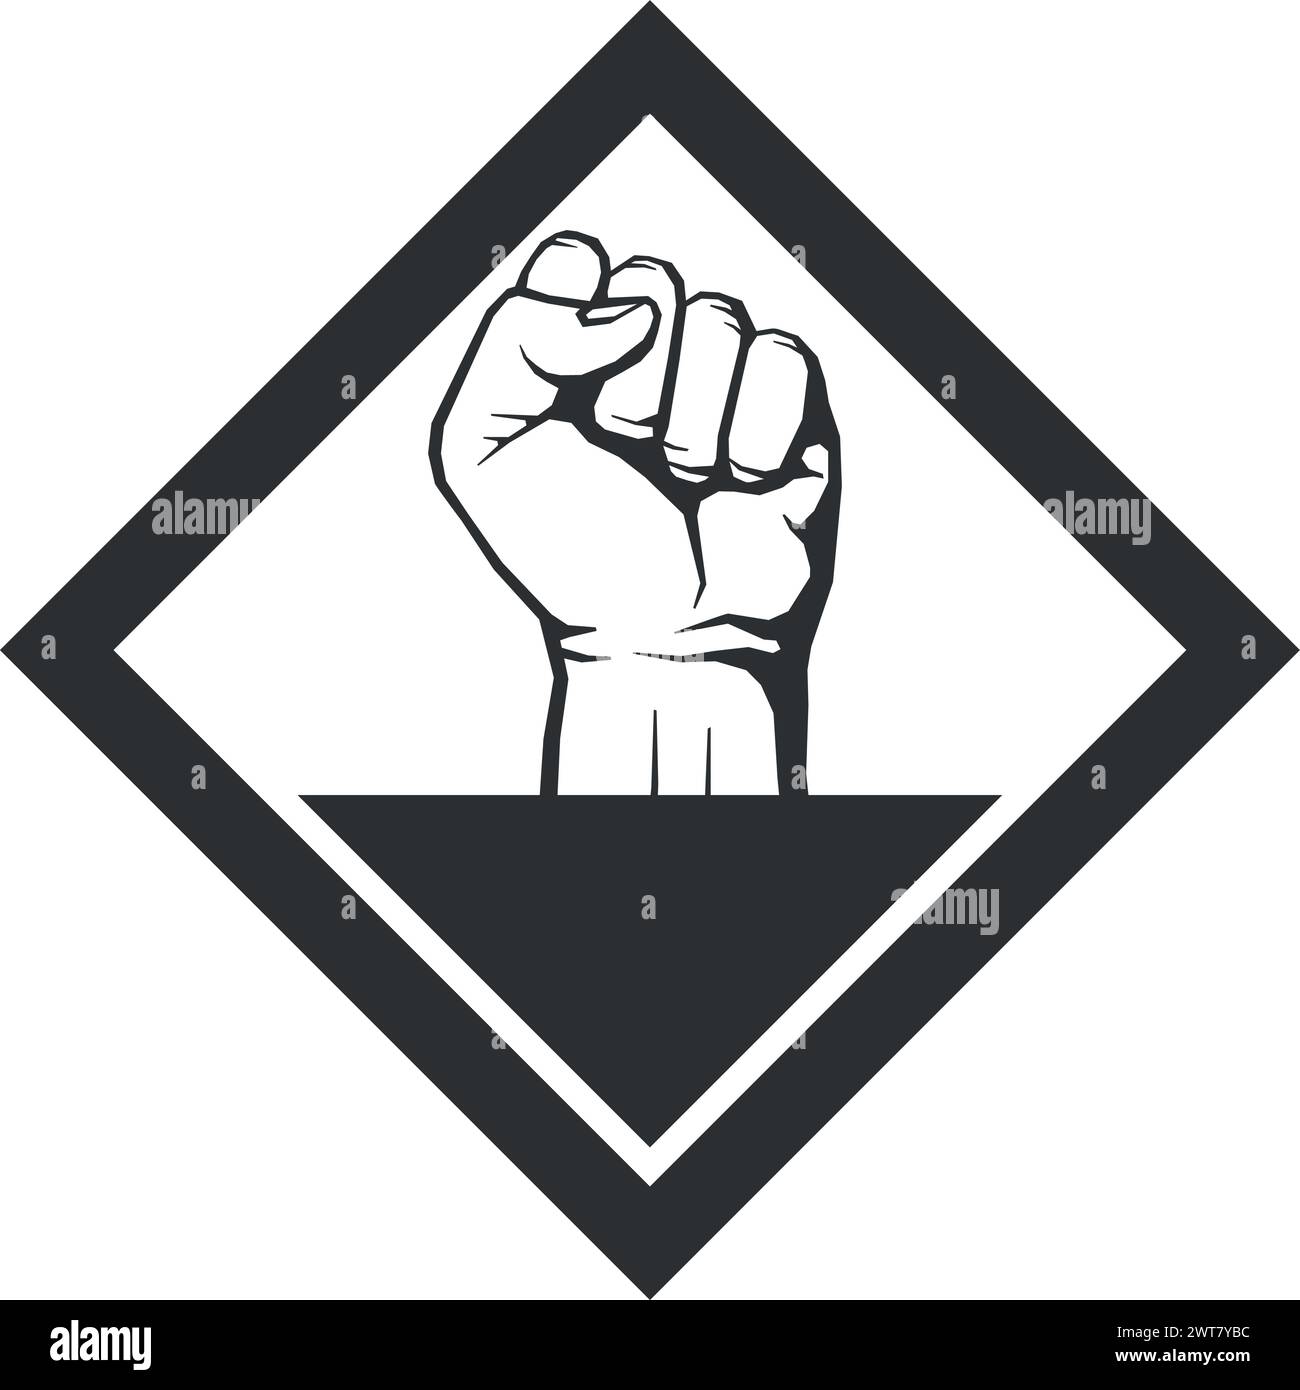 Fight club logo. Fist punch black emblem Stock Vector